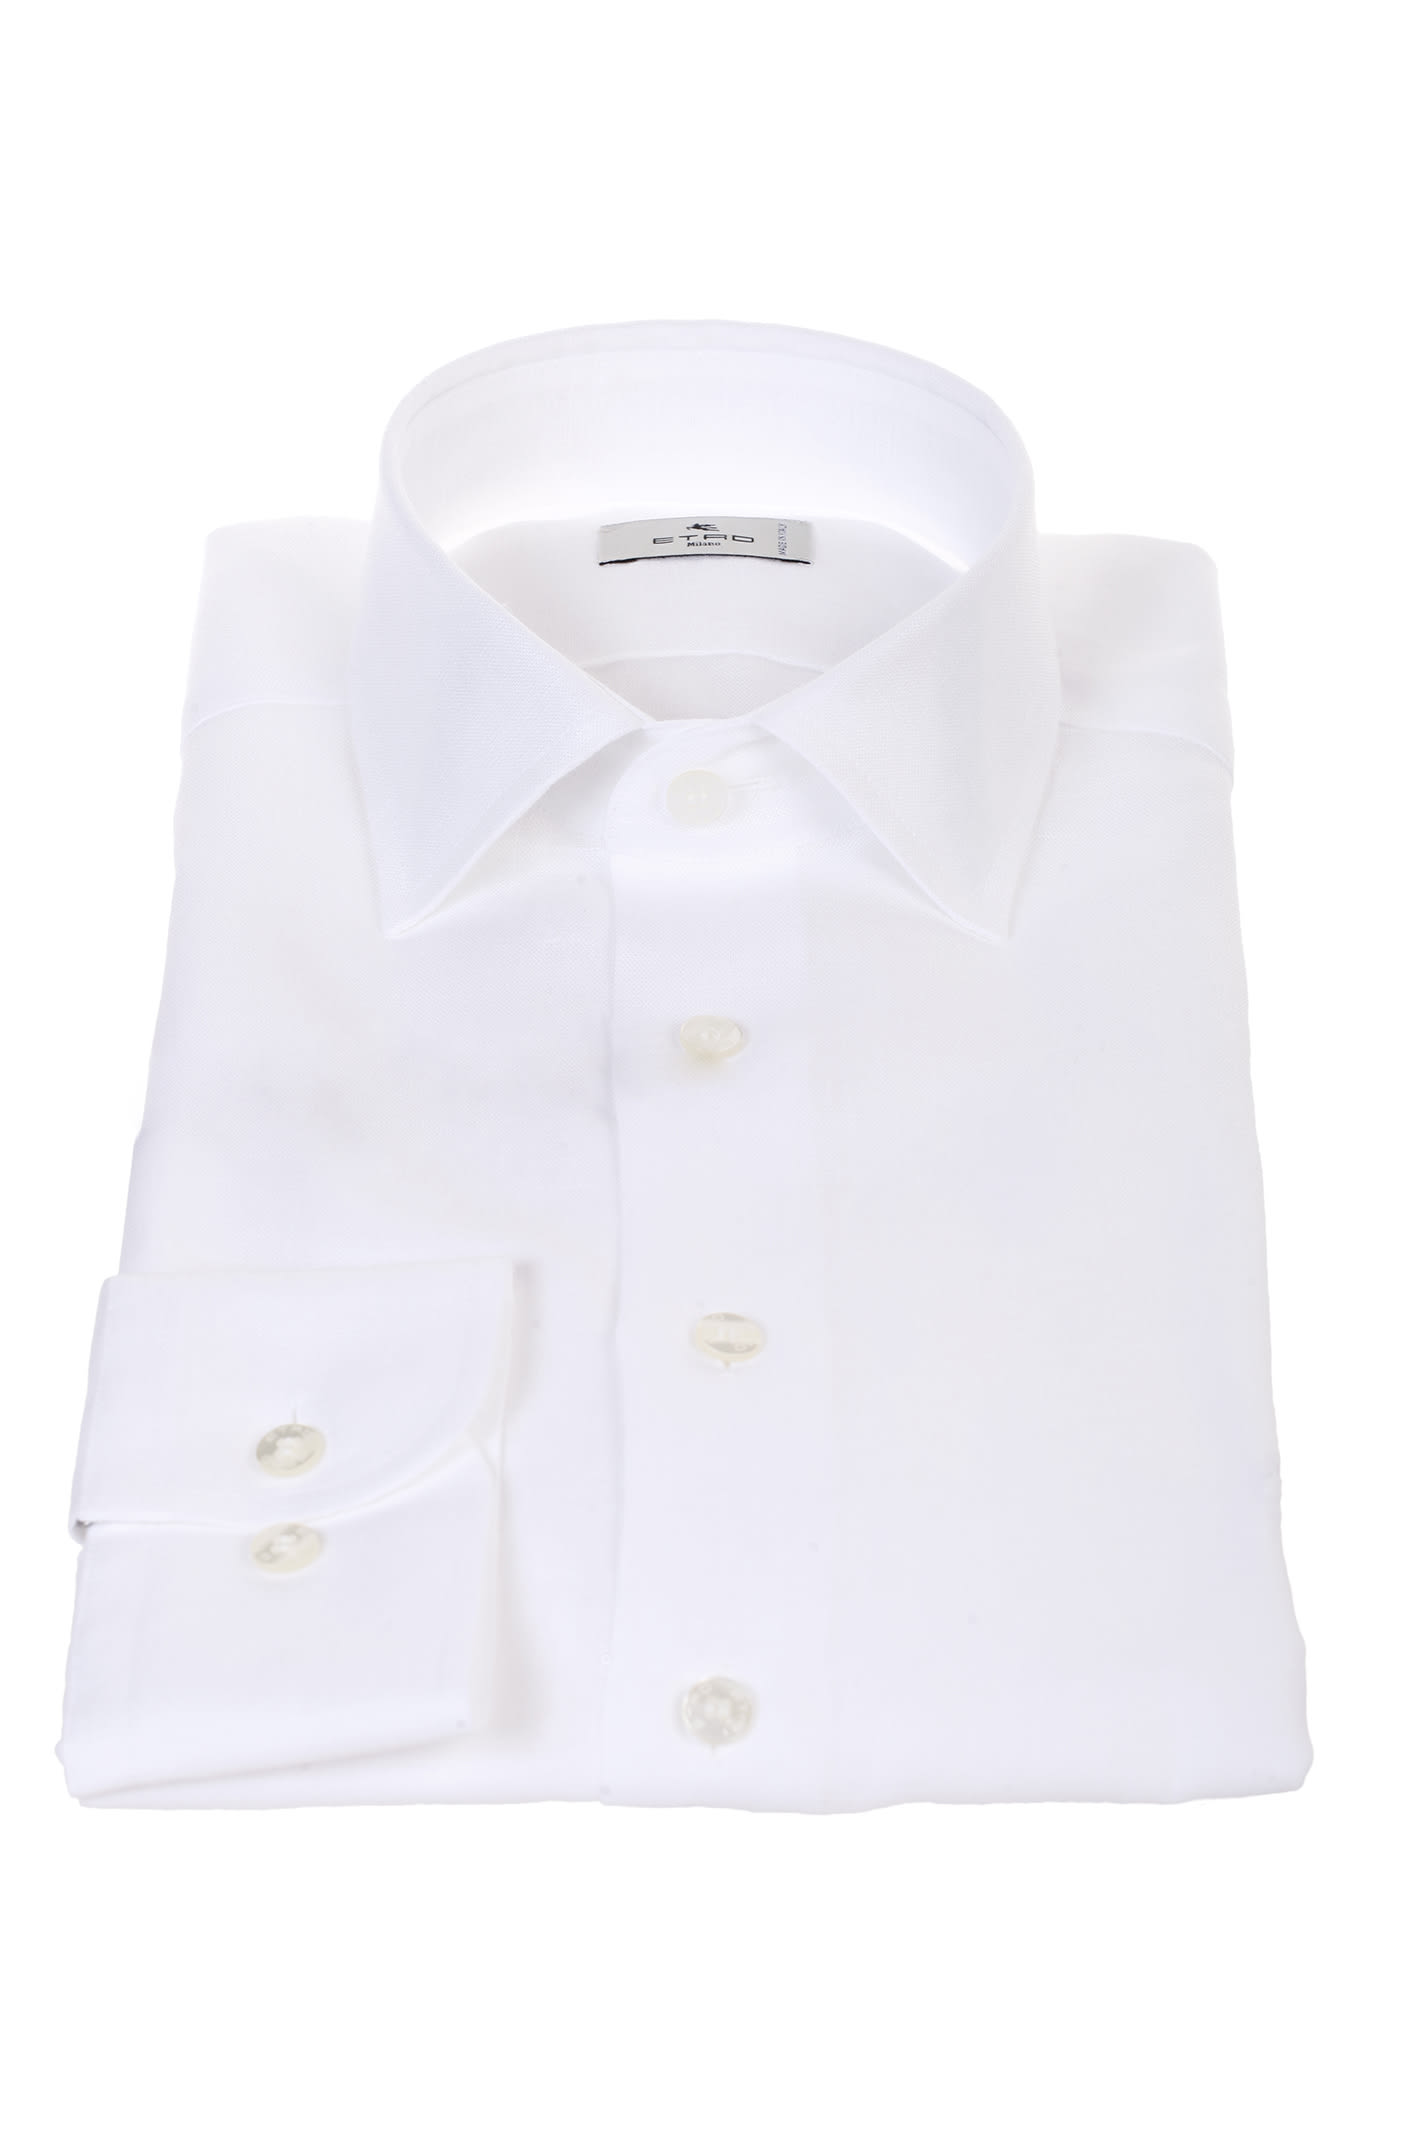 Etro white linen shirt